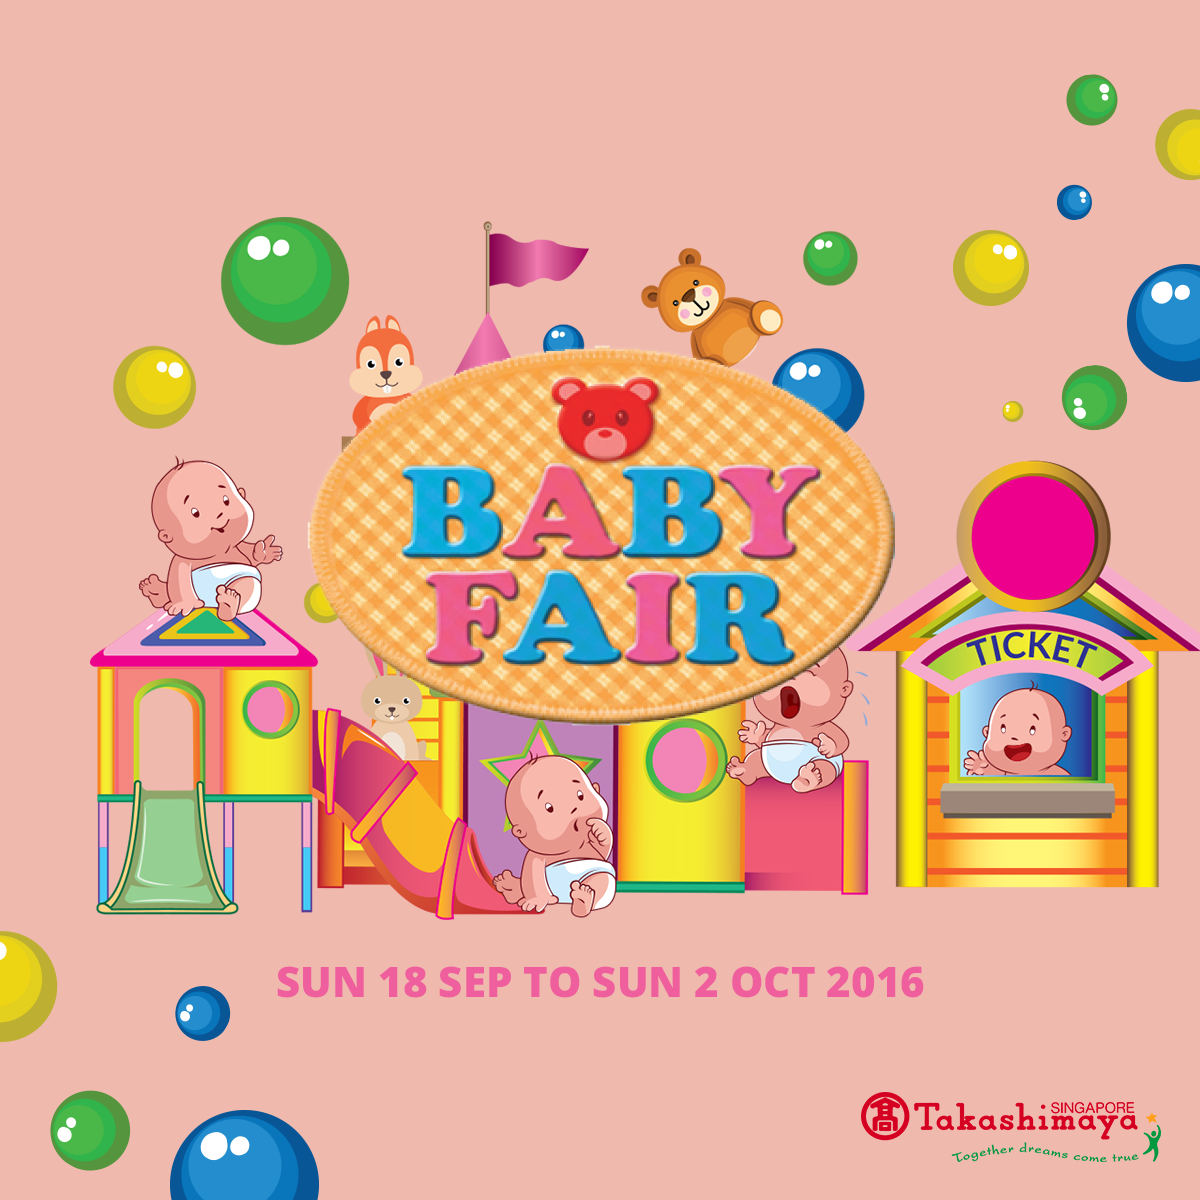 Promotions to Share - Takashimaya Baby Fair 2016